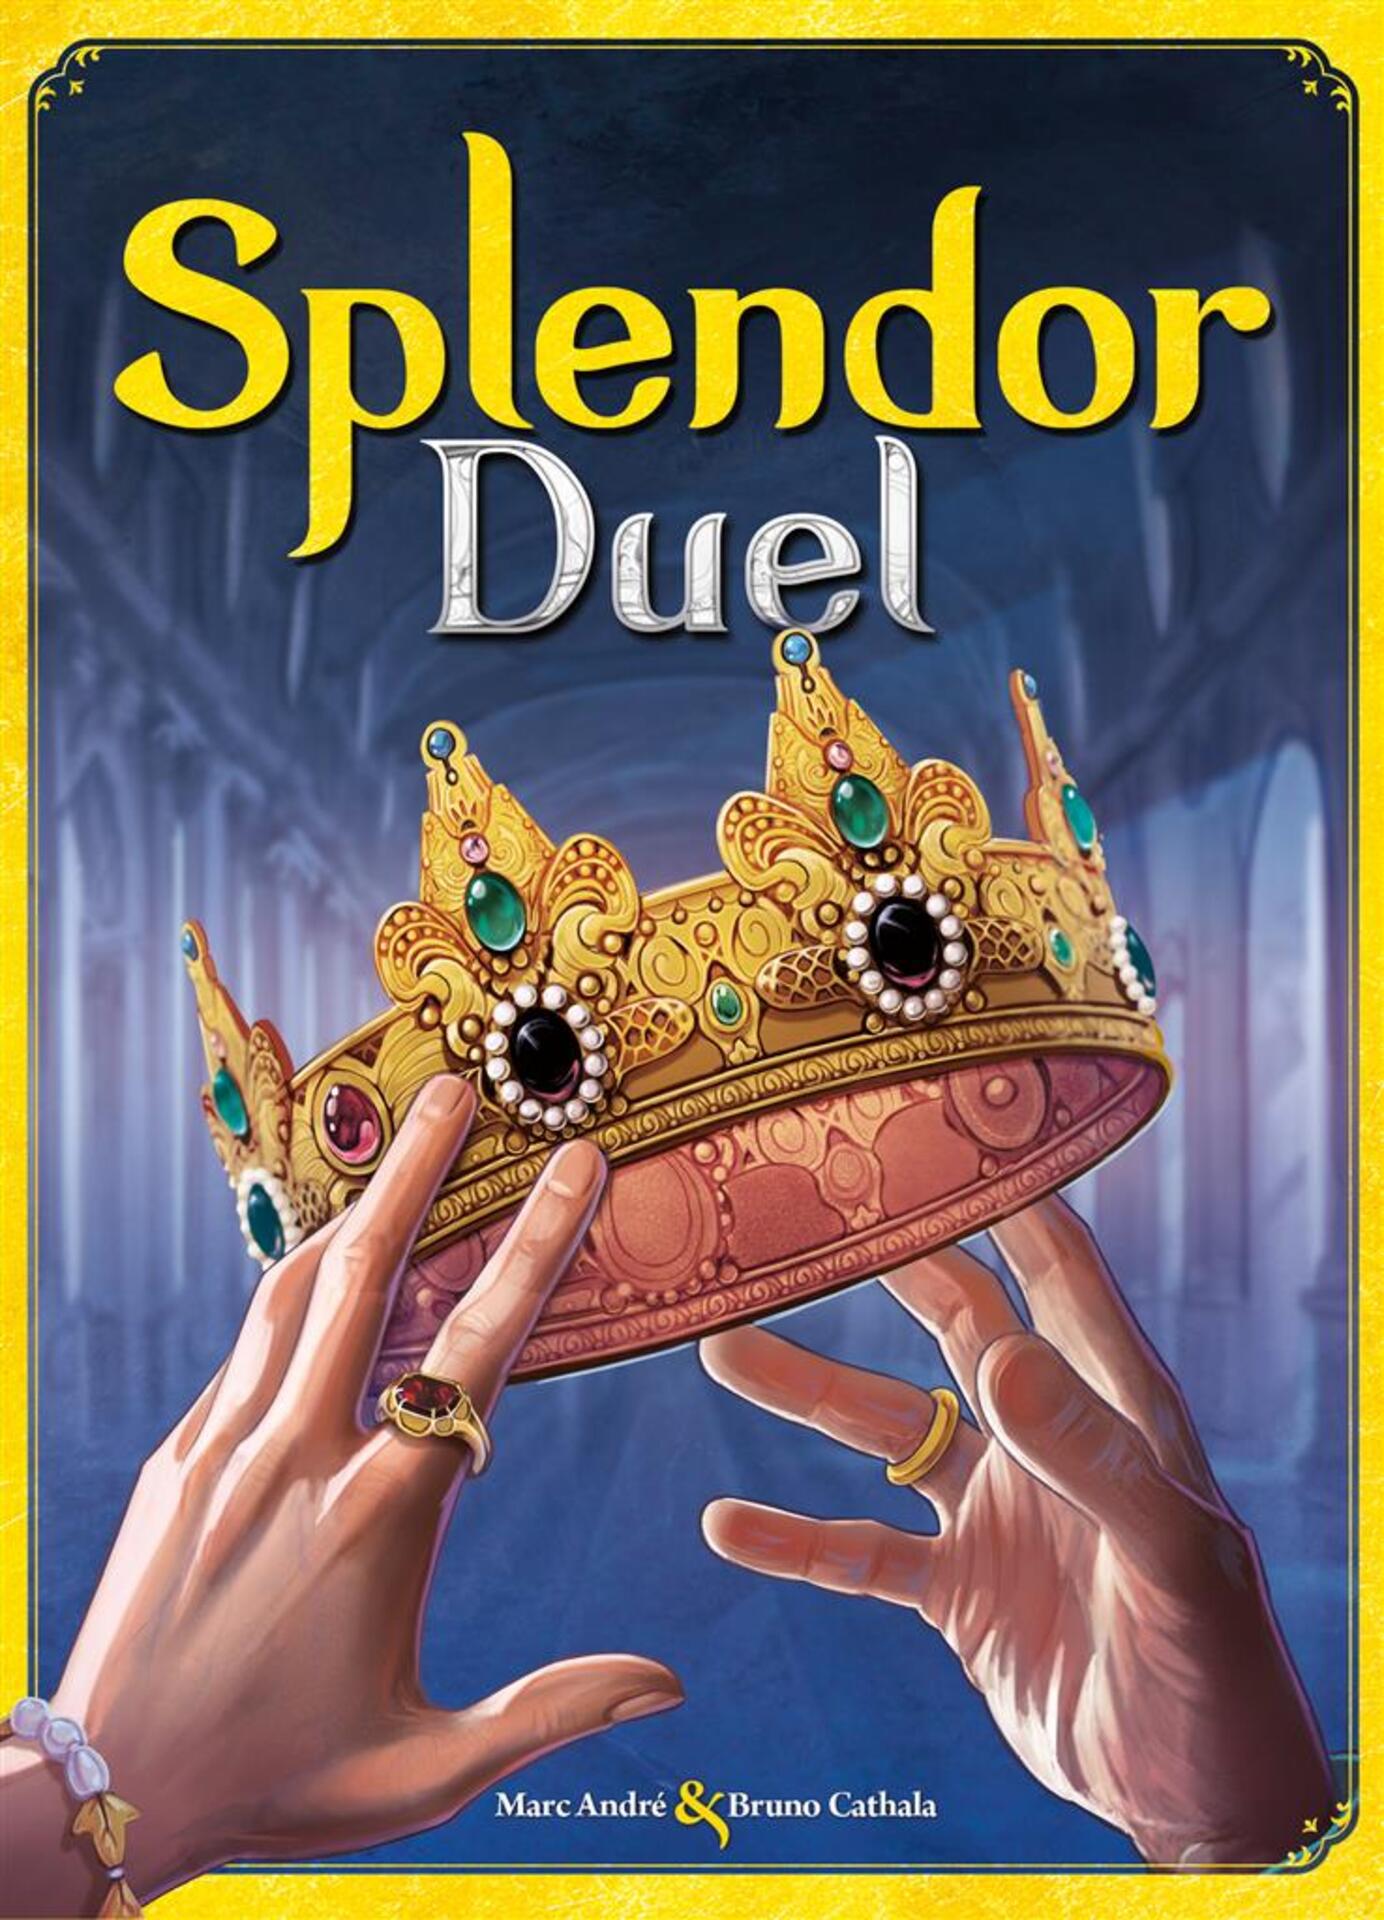 Splendor duel - Vin d'jeu